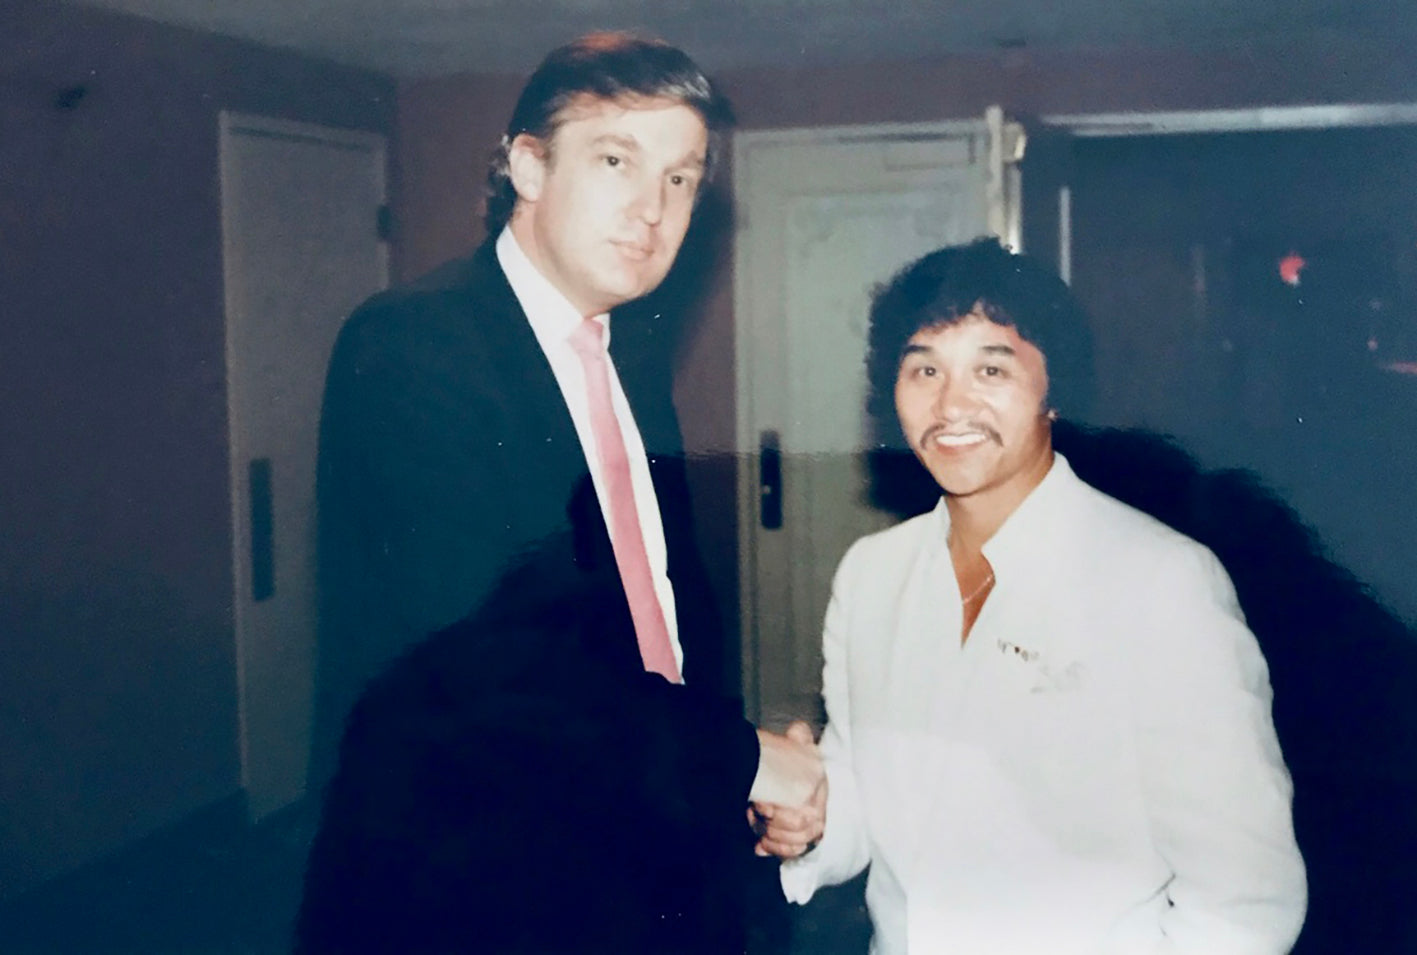 Rocky Aoki and Donald Trump